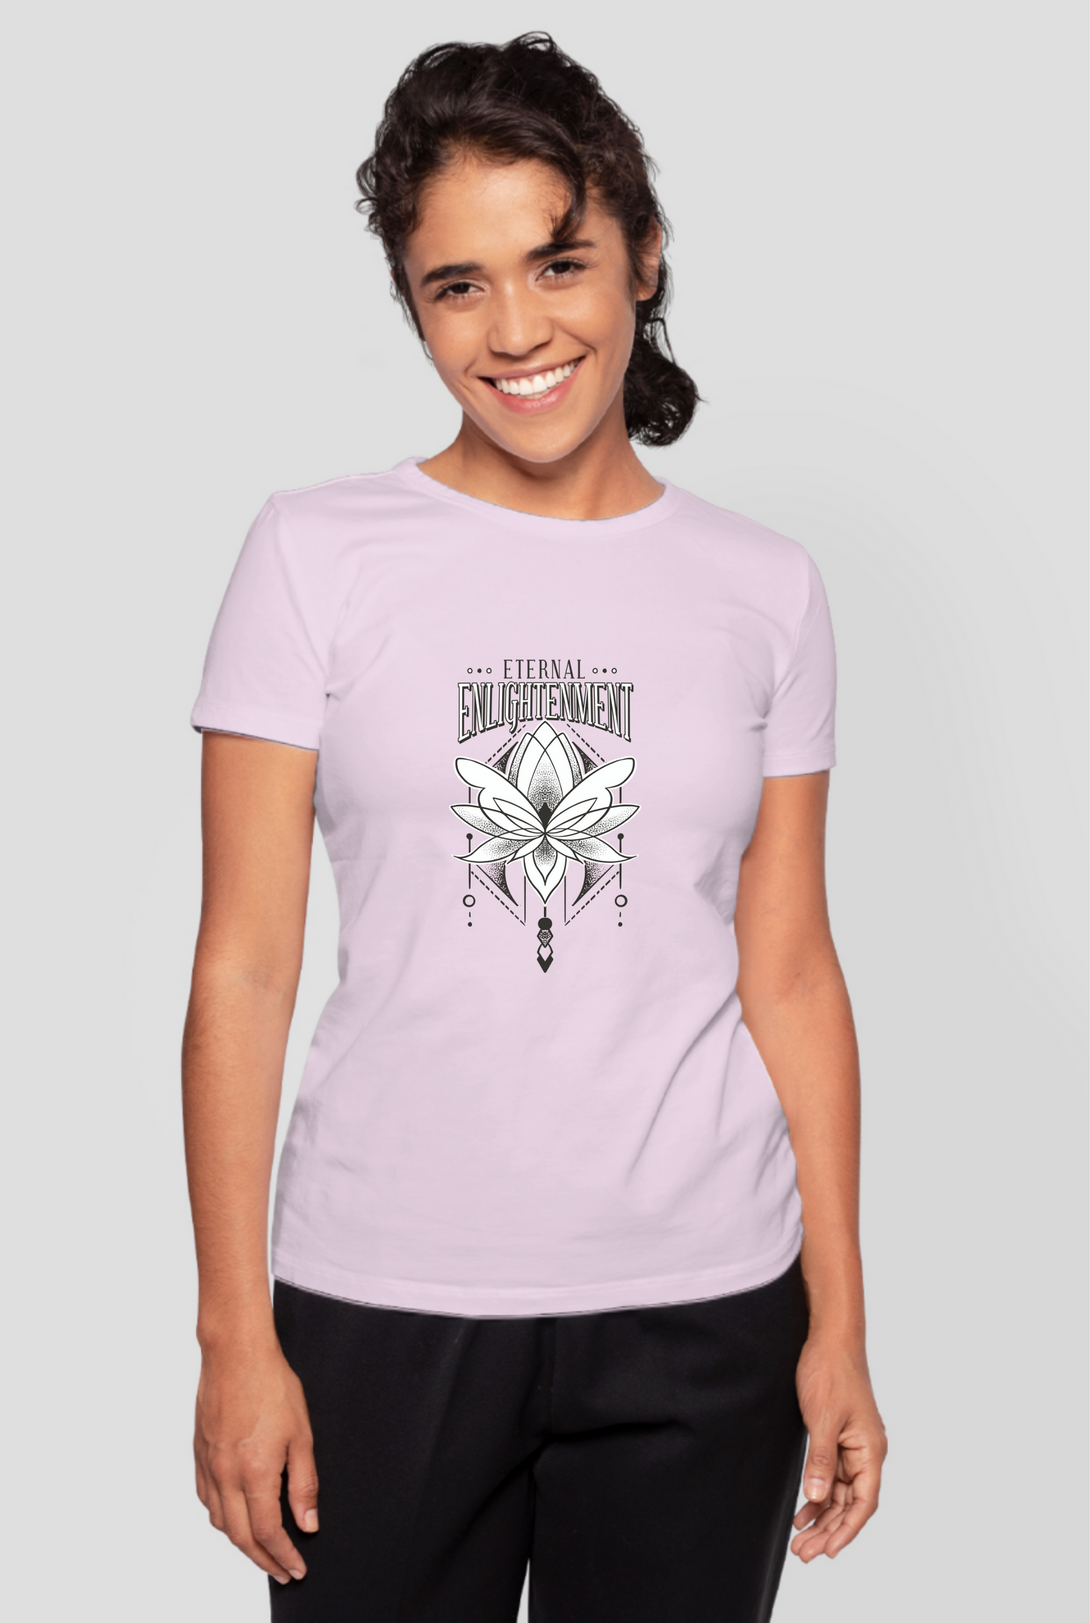 Eternal Enlightenment Lotus Printed T-Shirt For Women - WowWaves - 7